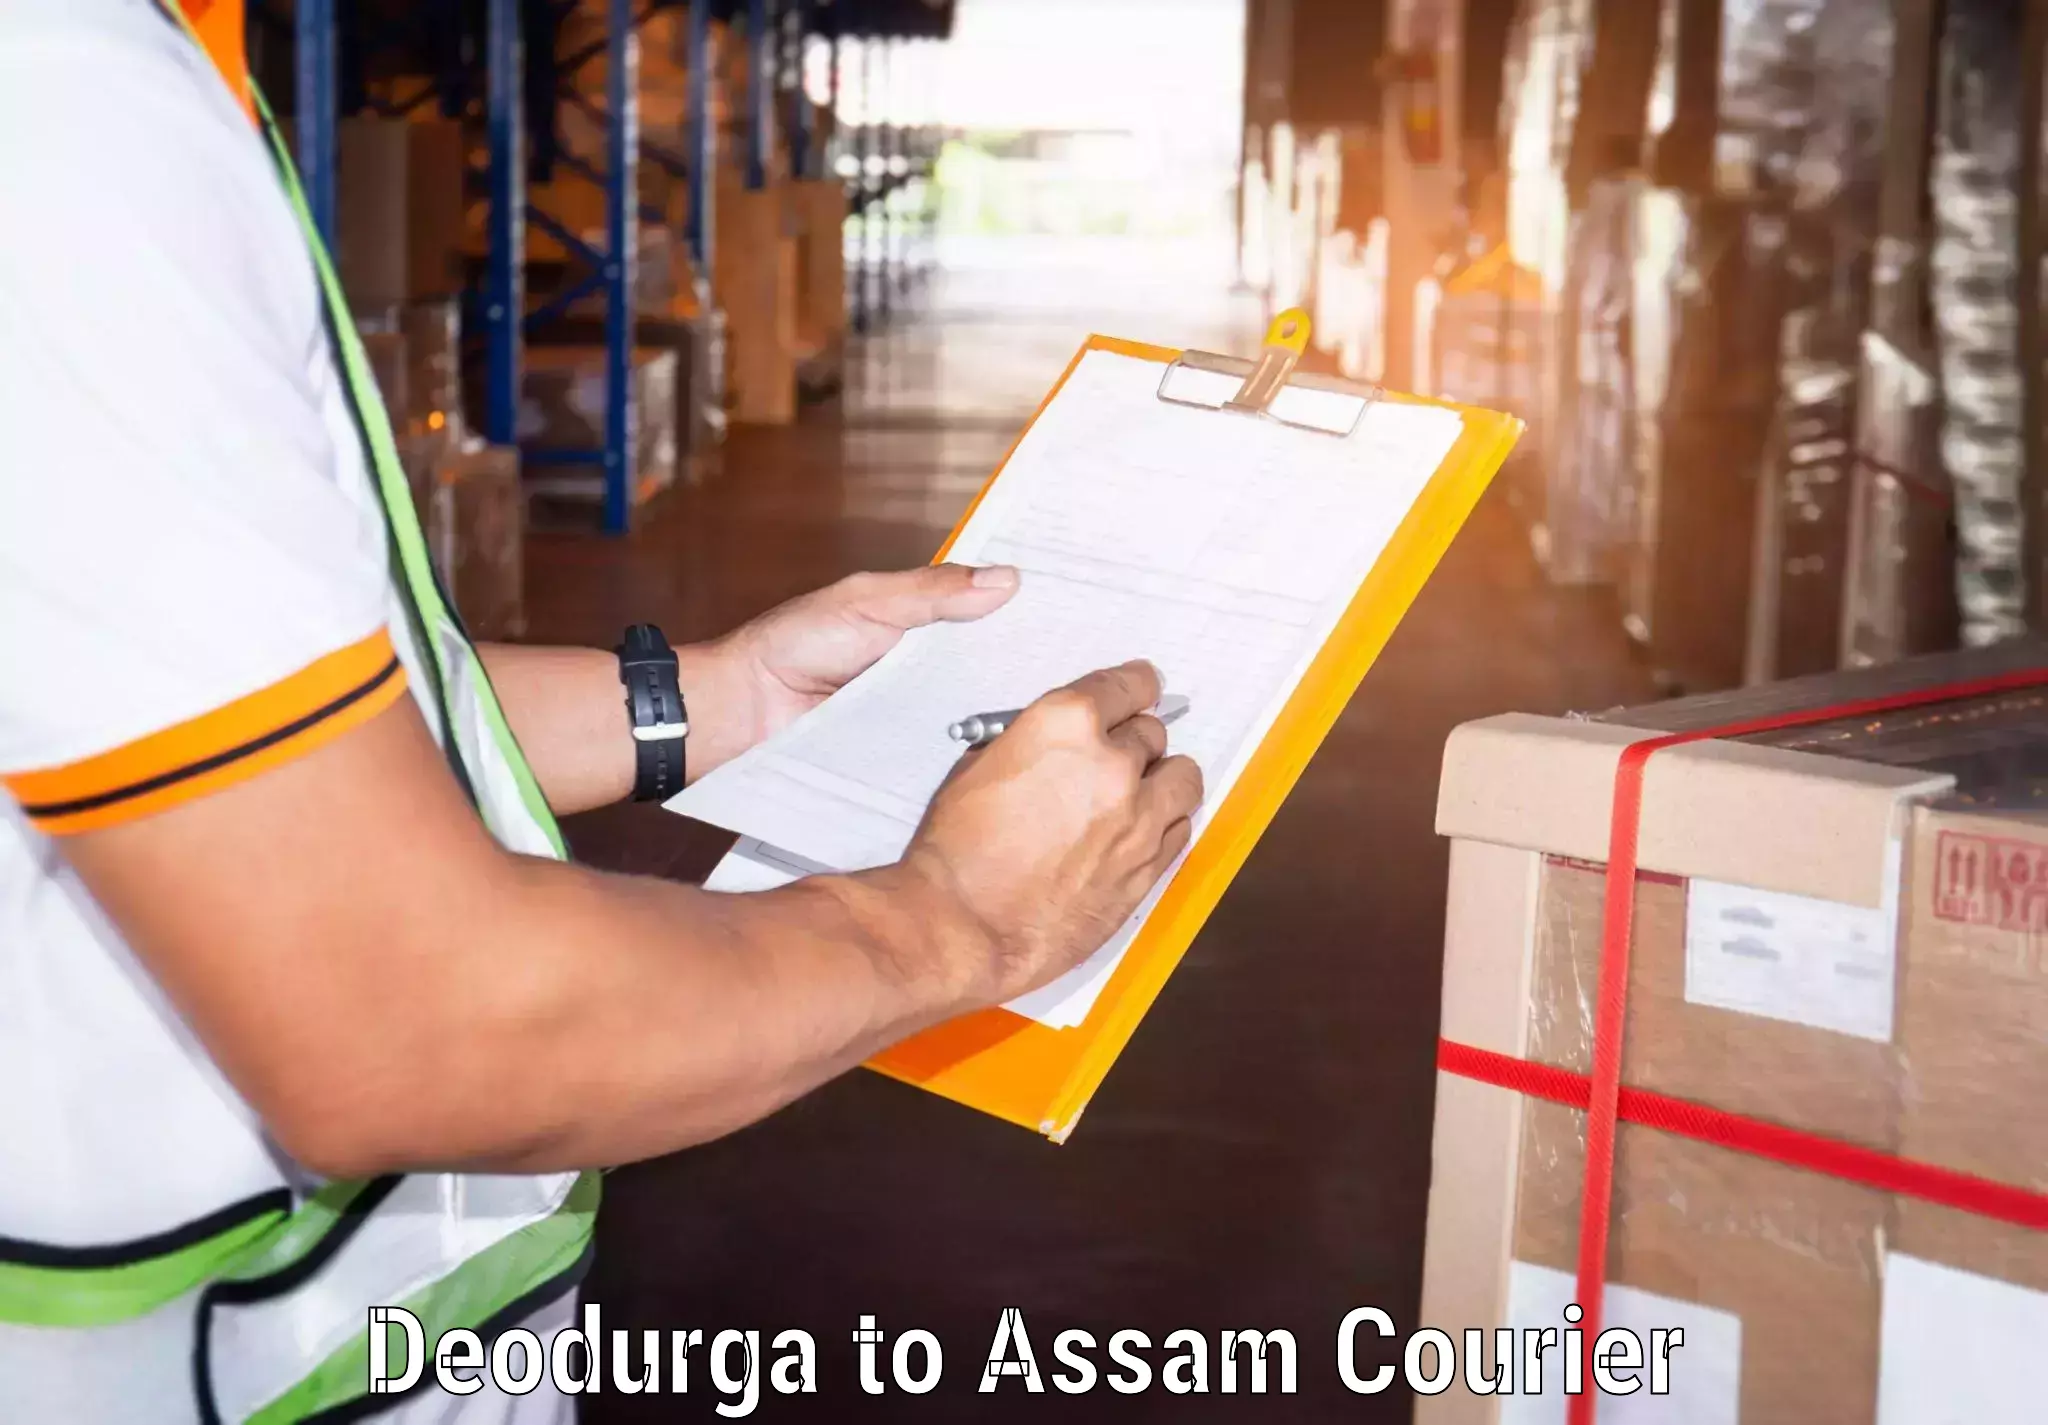 Express package handling Deodurga to Lala Assam